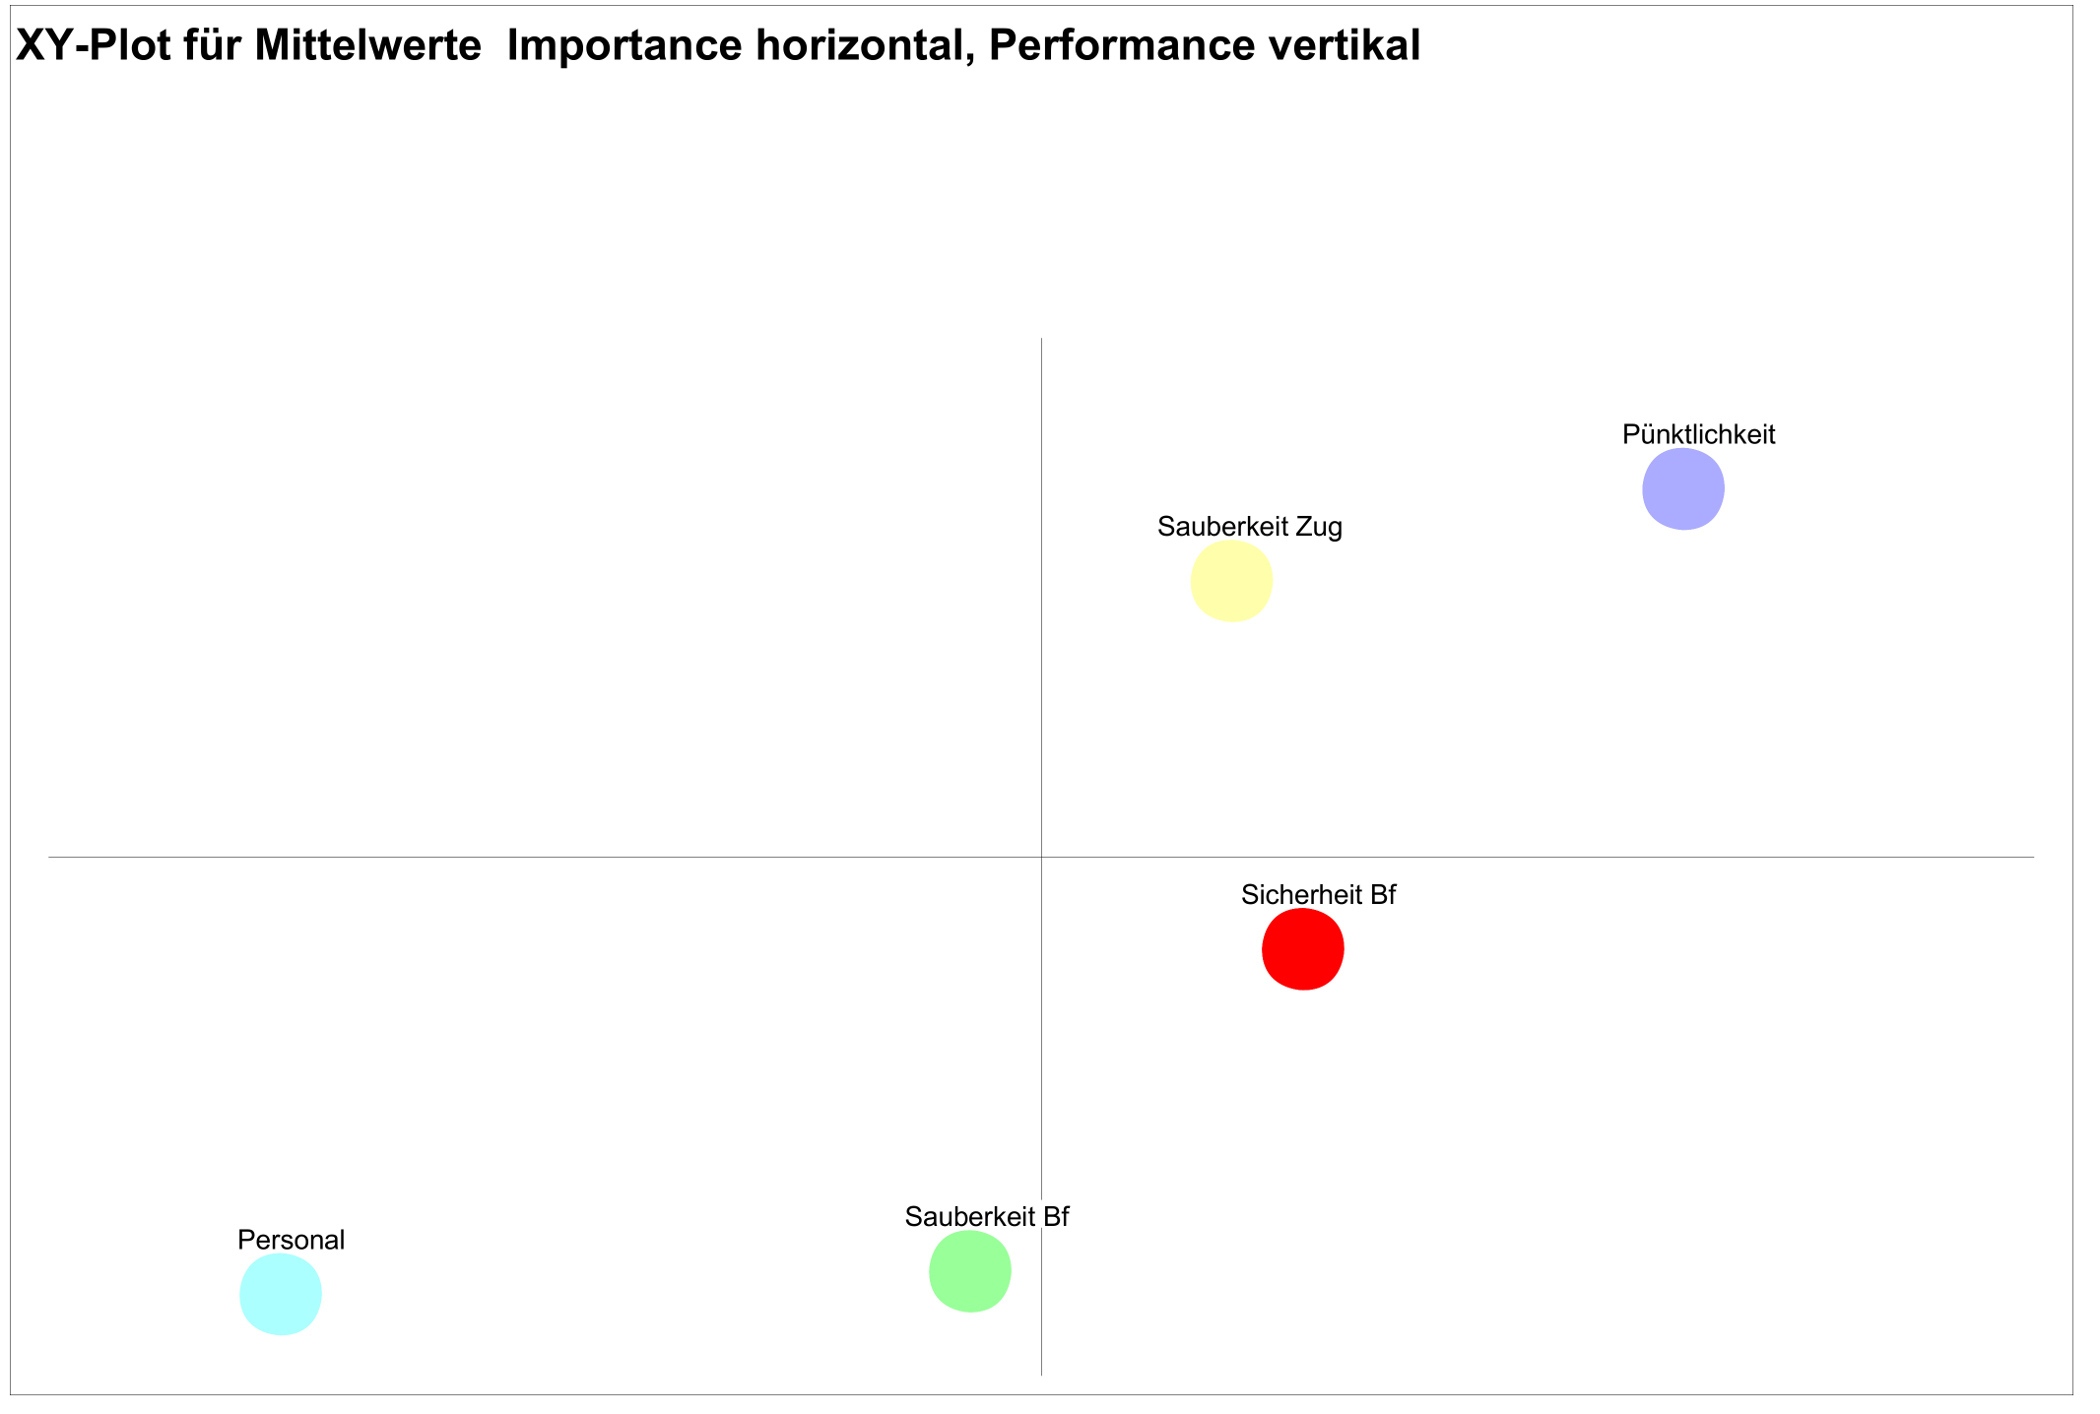 X/Y-Plot Importance vs. Performance 